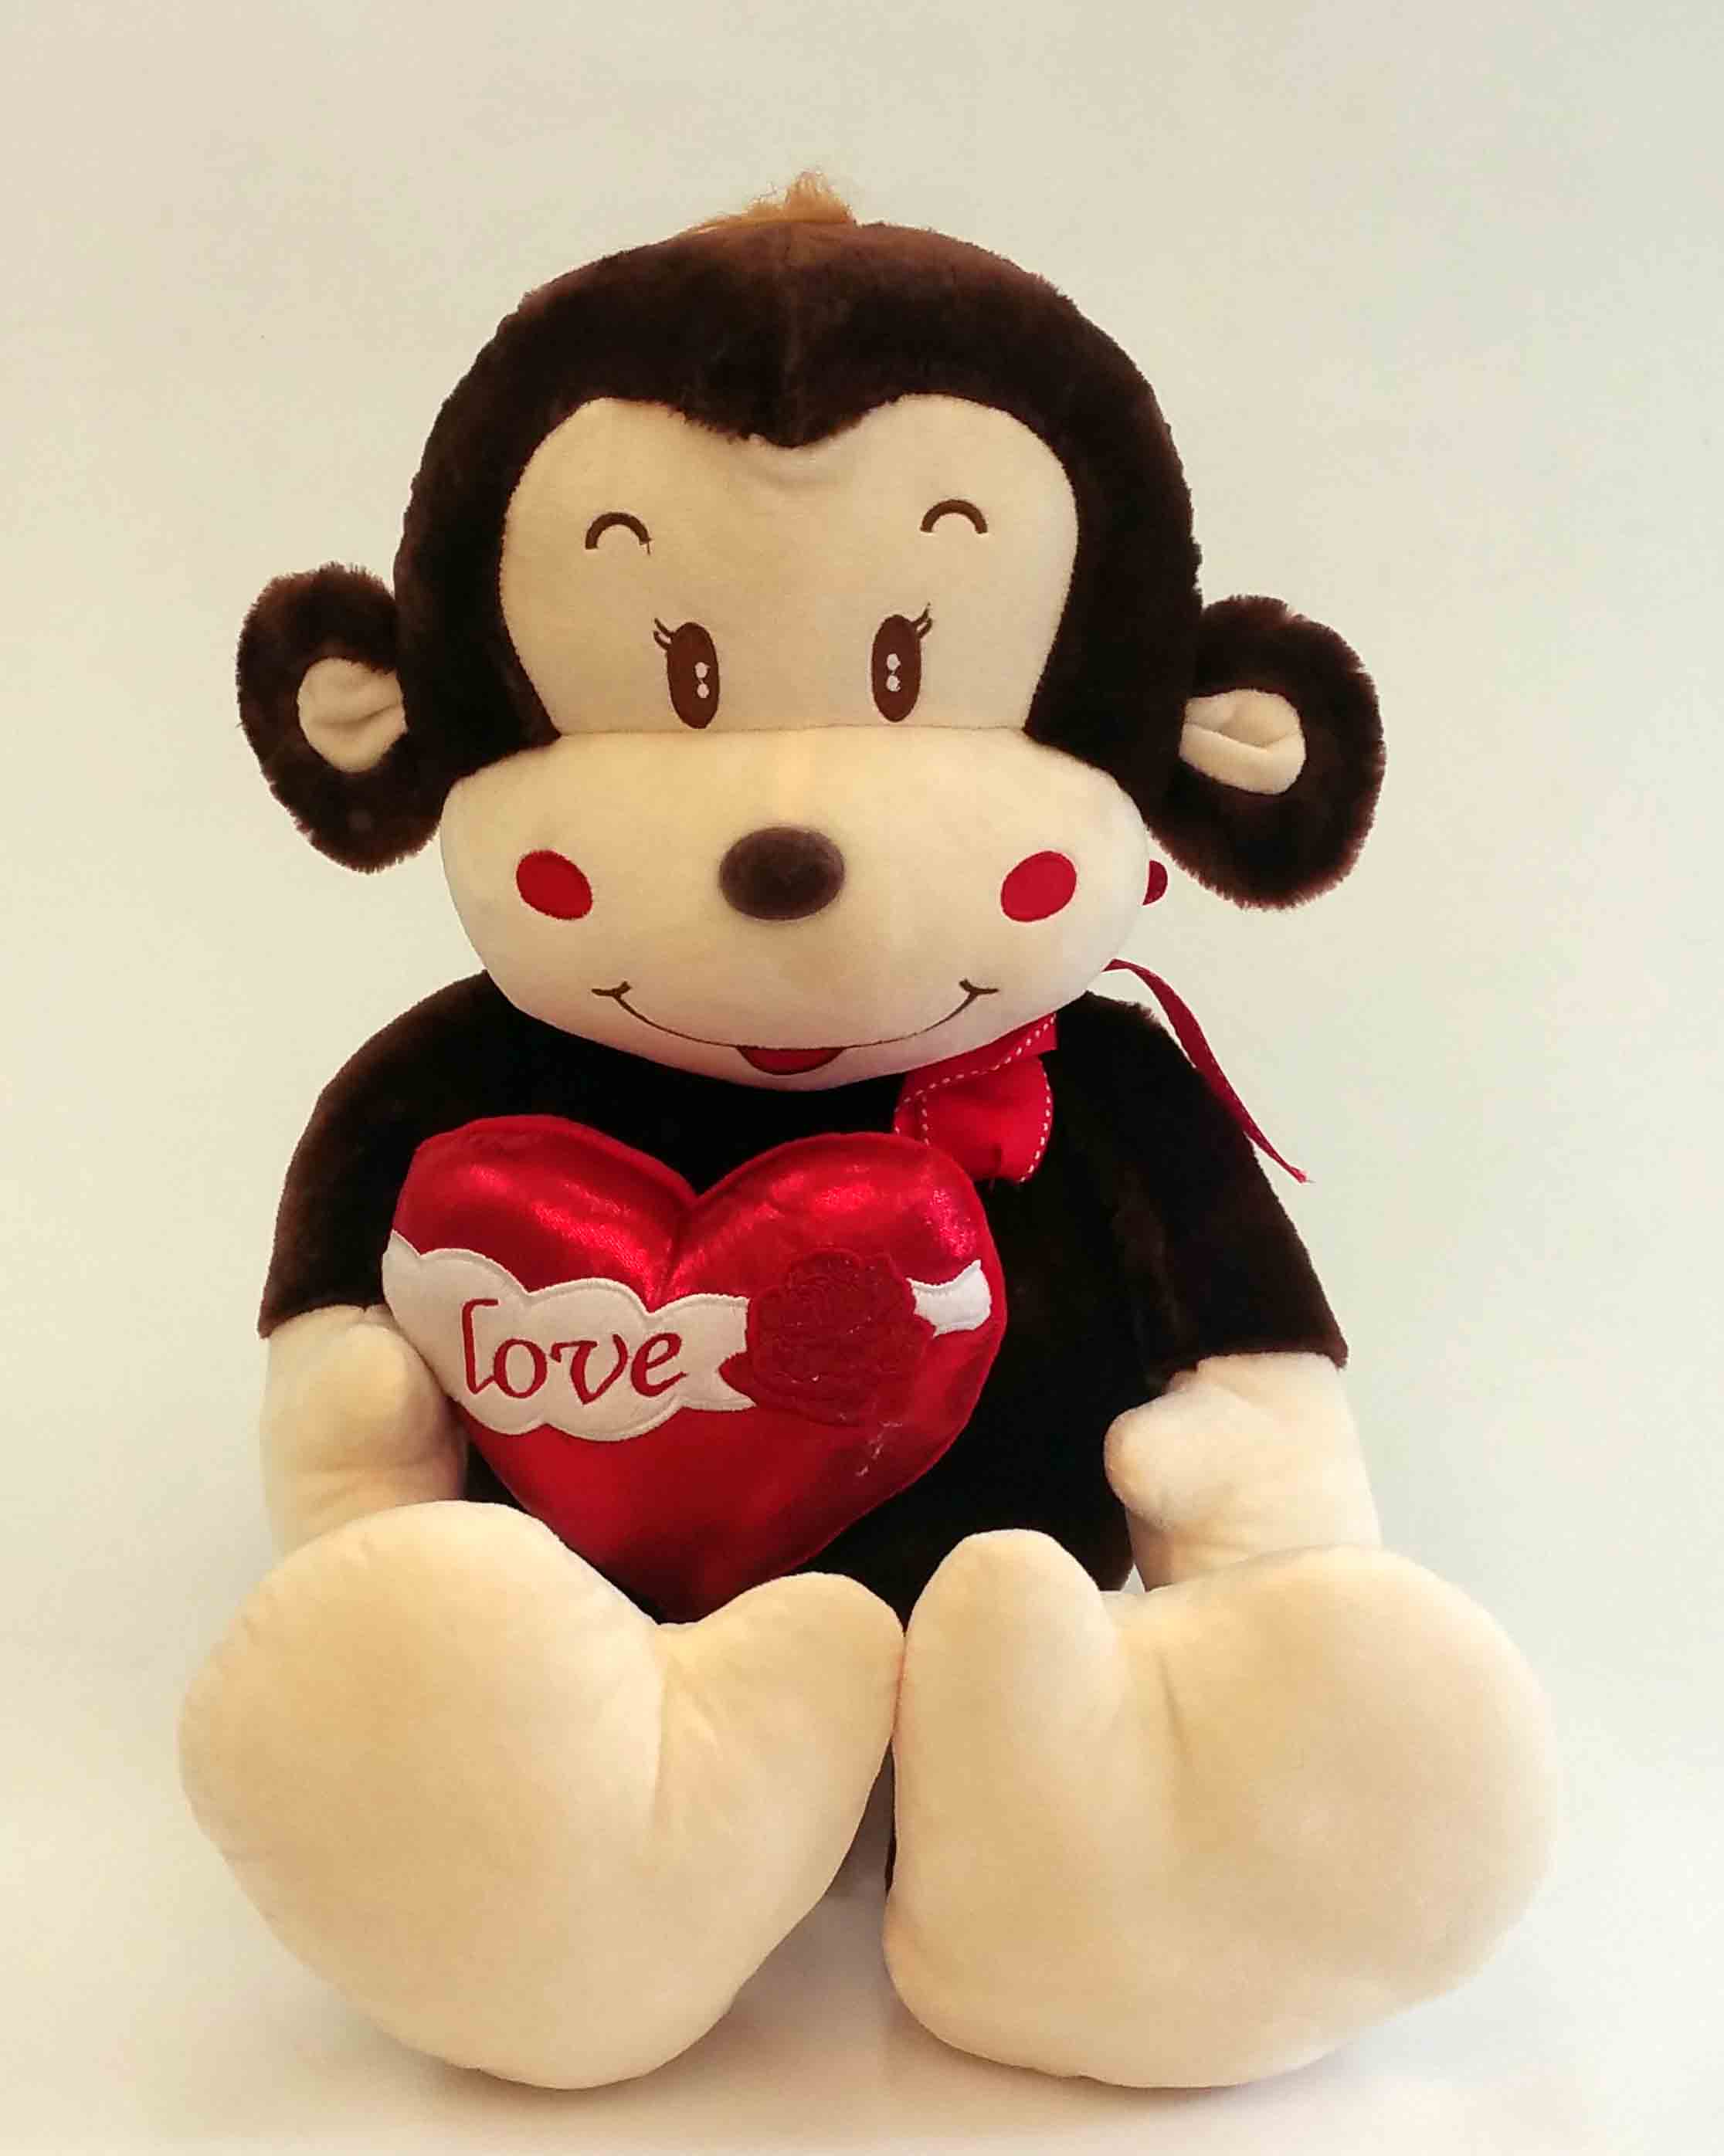 P901 - 23" Plush Monkey with Love Heart - 21.50 ea